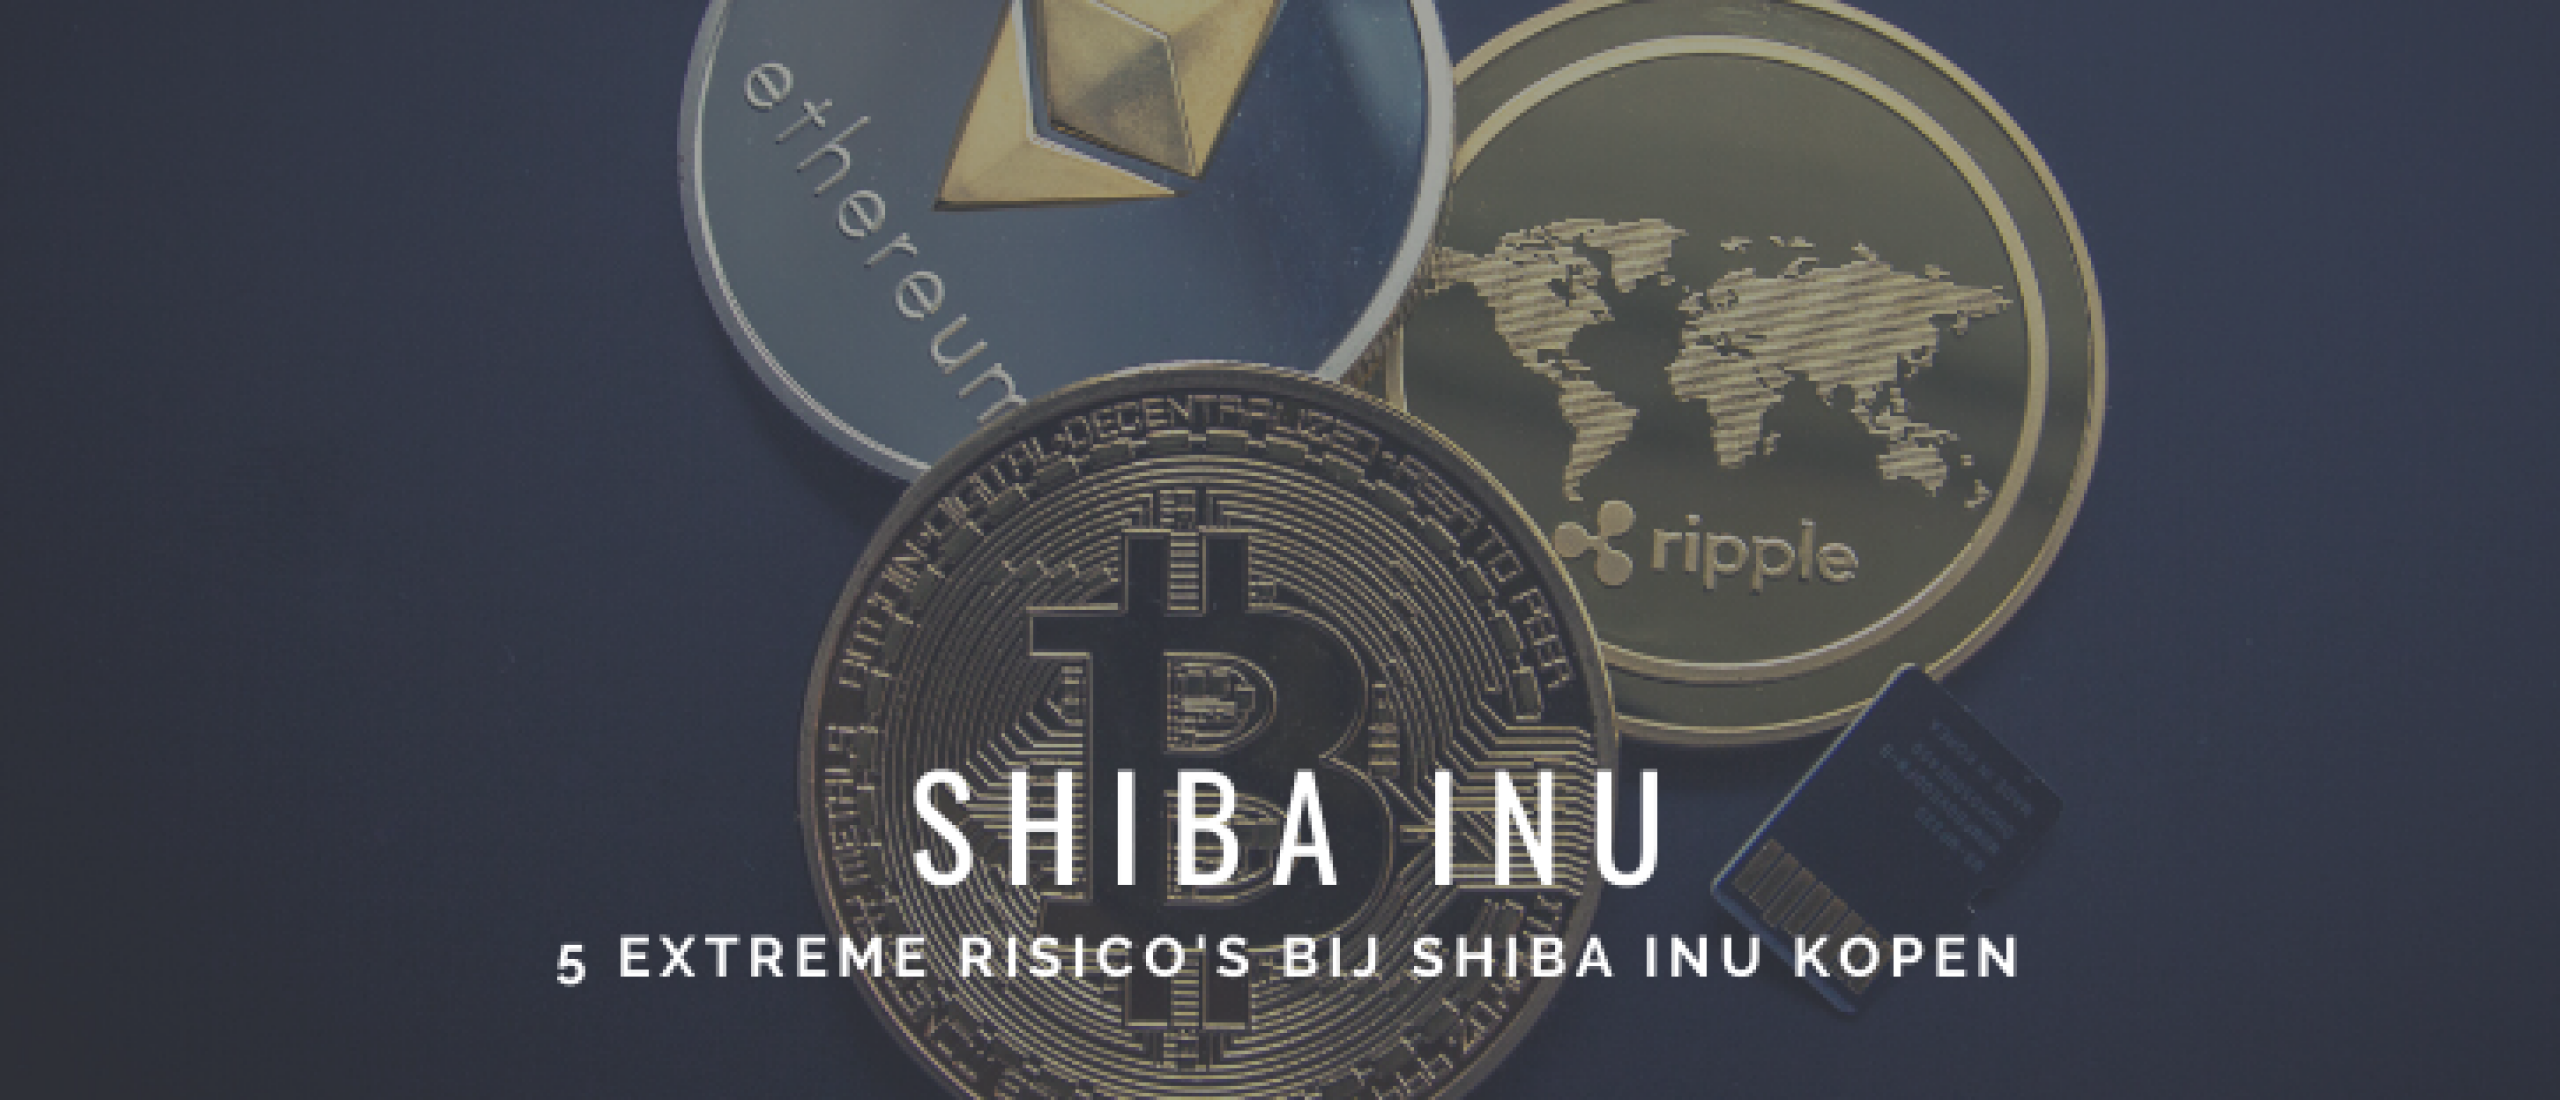 Shiba Inu Coin Kopen? Let Op 5 Extreme Risico’s!